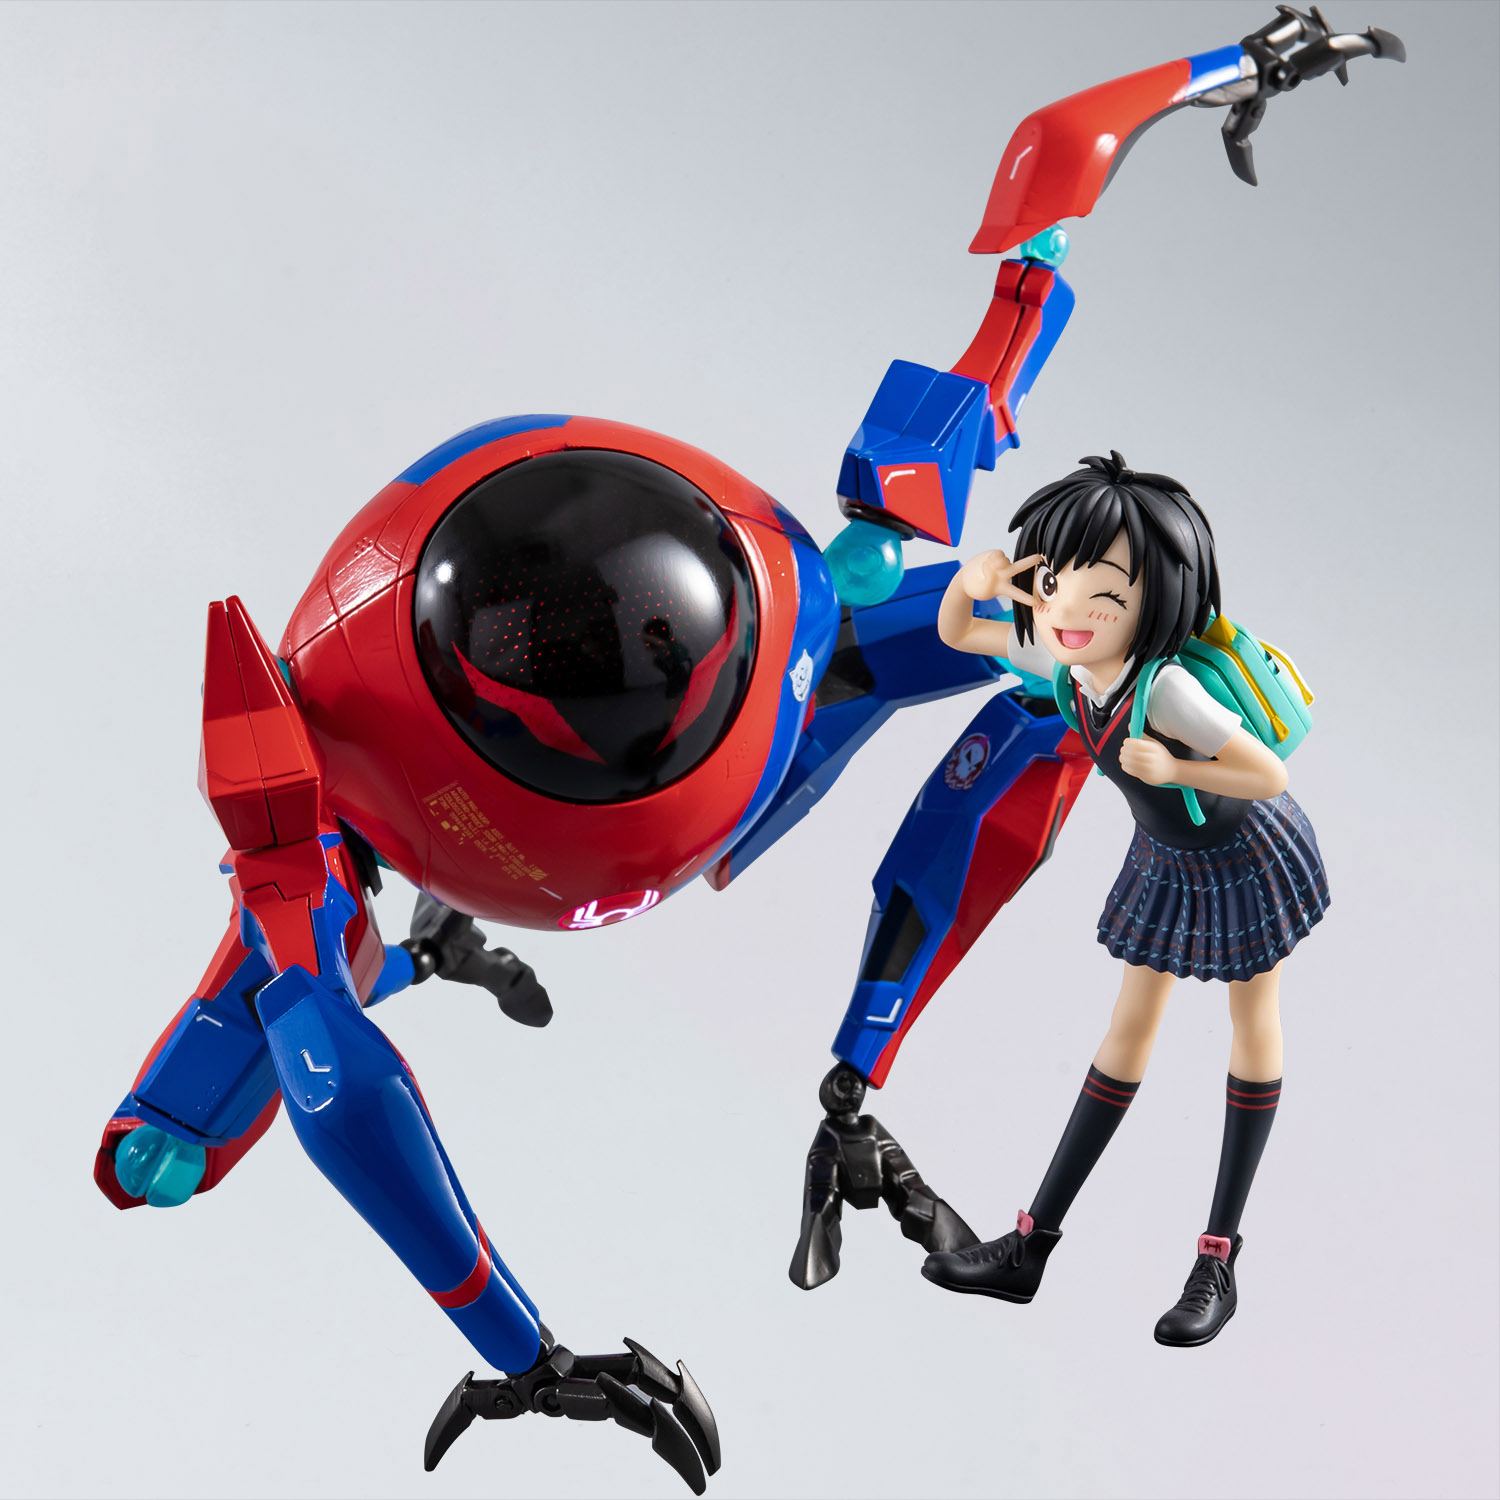 SV Action Spider-Man Into the Spider-Verse Action Figure: Peni Parker & SP//dr Sentinel